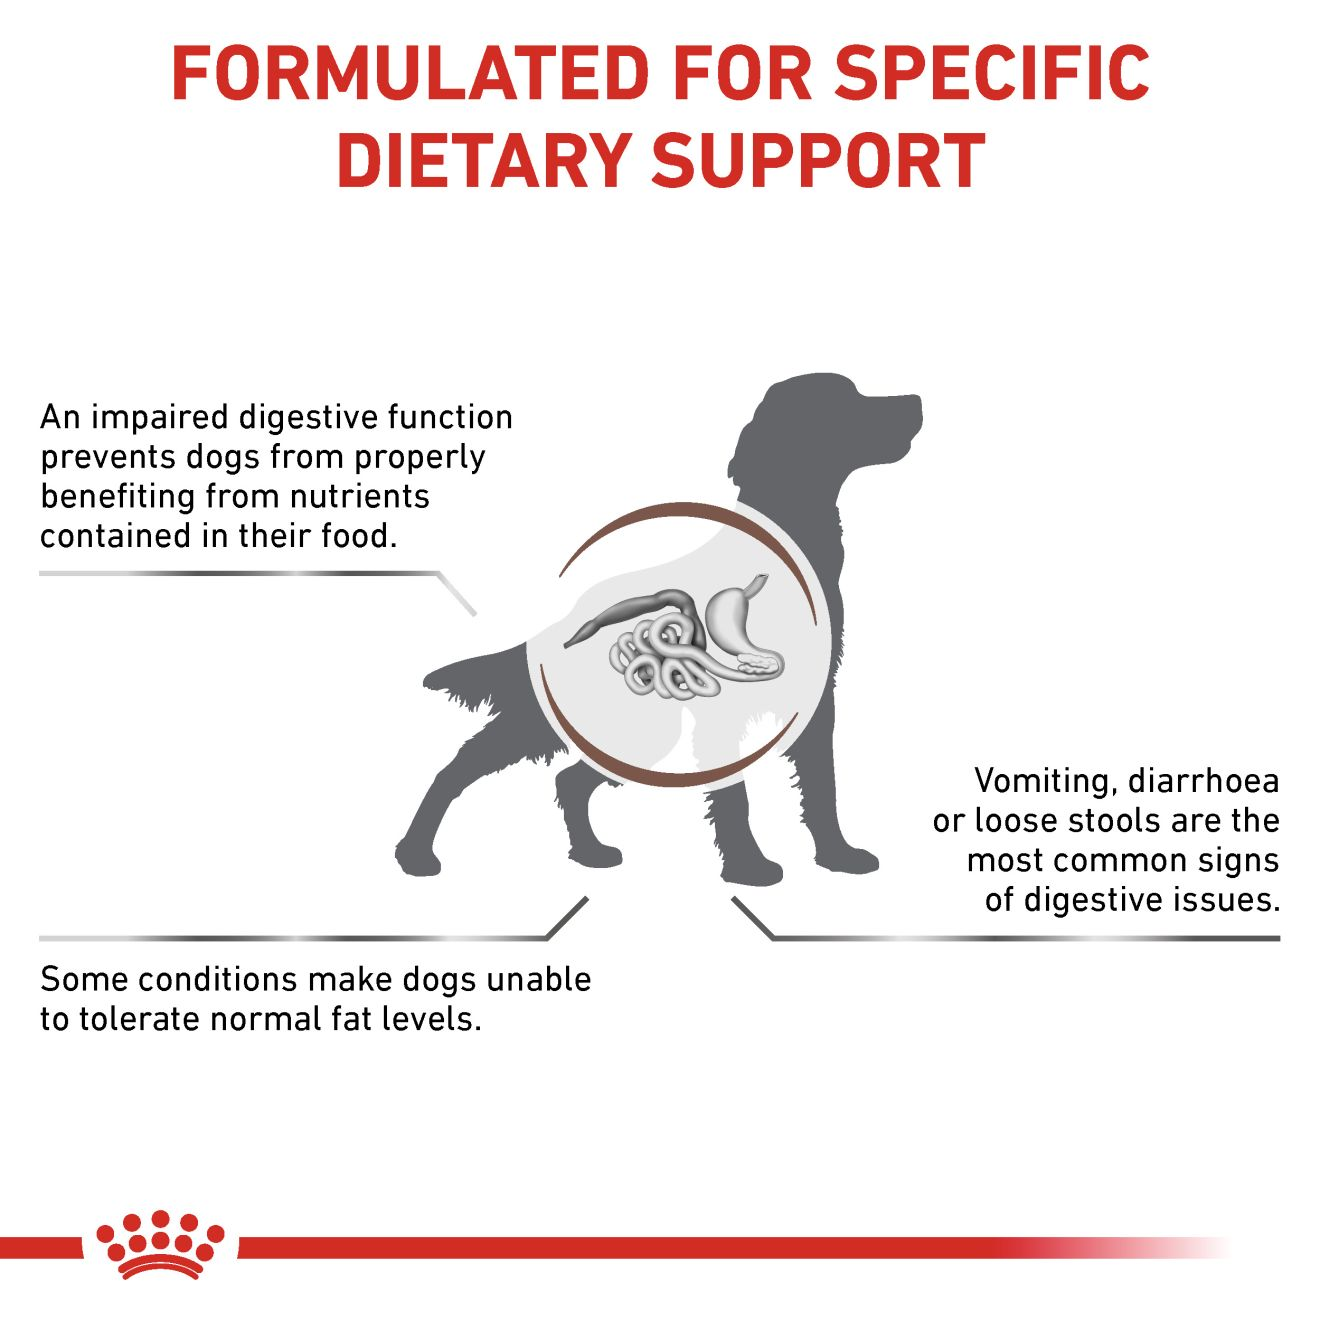 Royal Canin Gastrointestinal Low Fat Wet Dog Food